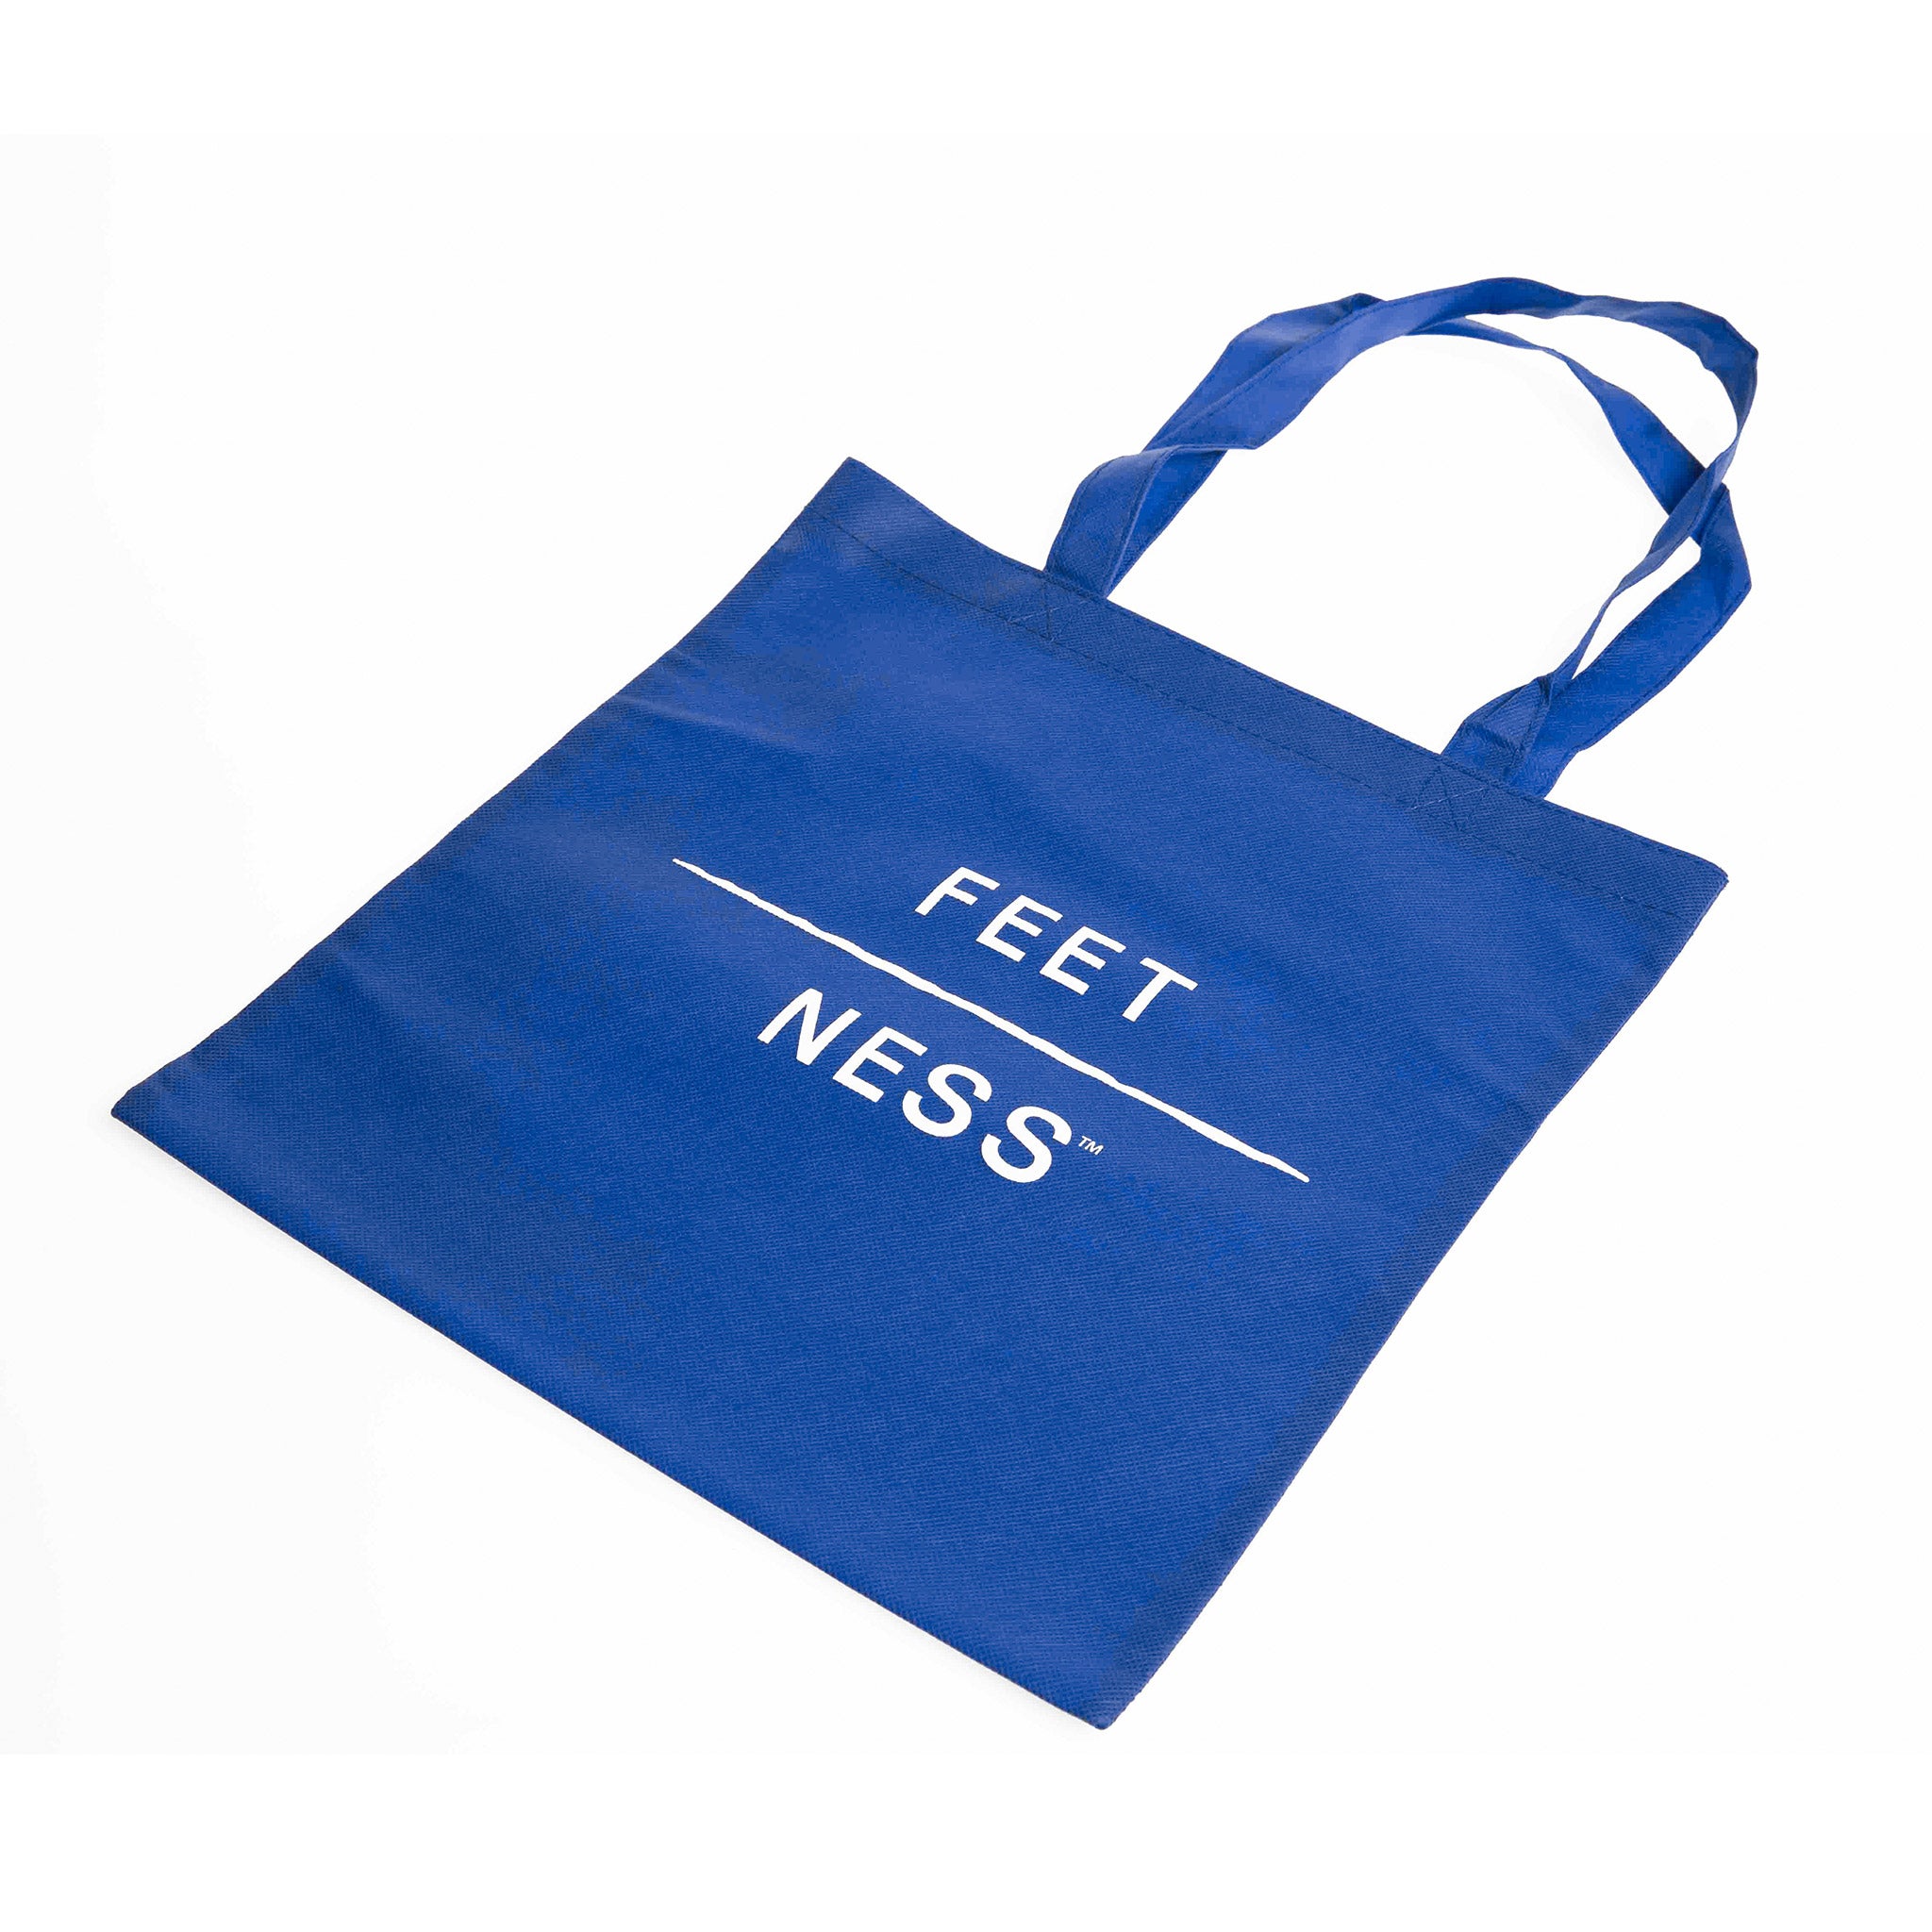 Tote Bag Feet-Ness™ Blue